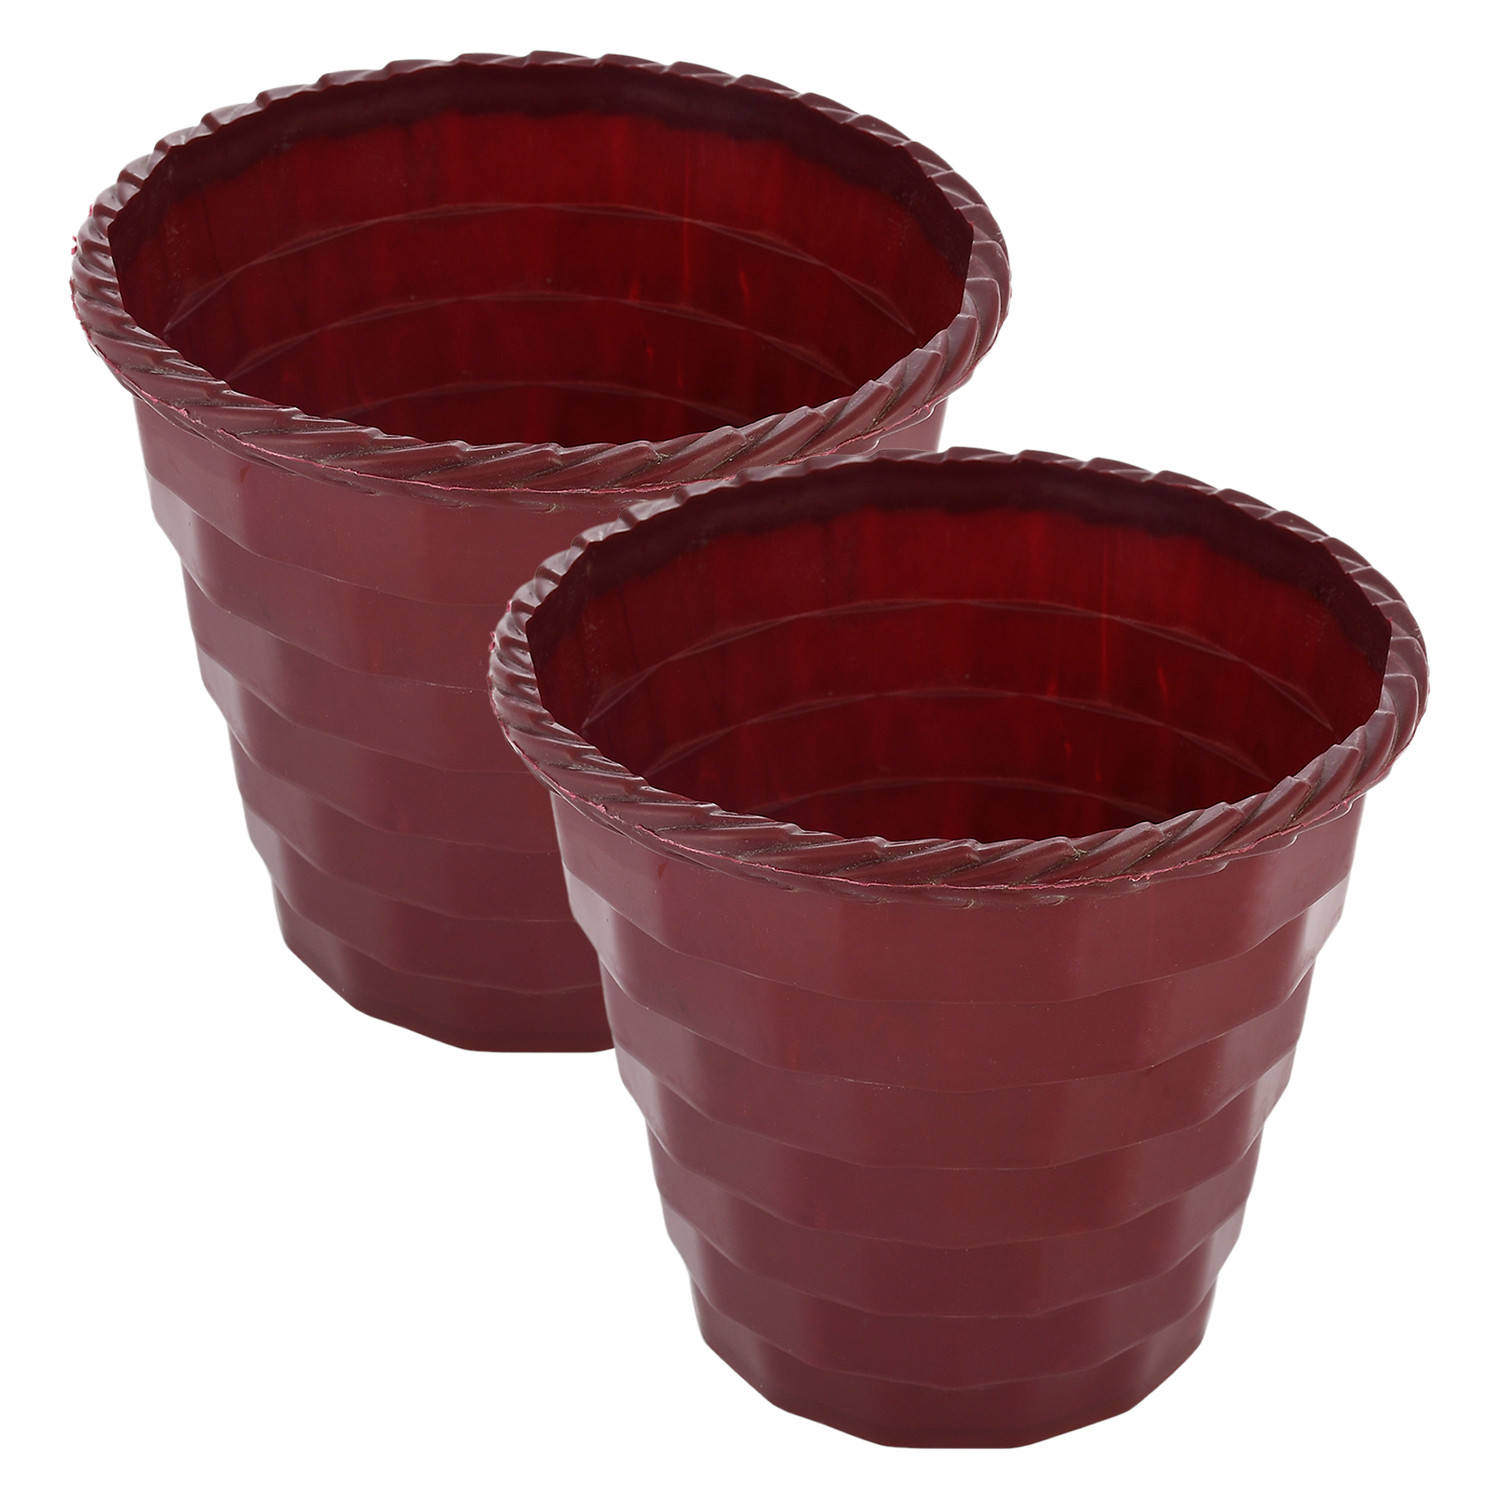 Kuber Industries Brick Flower Pot|Durable Plastic Flower Pots|Planters for Home Décor|Garden|Living Room|Balcony|8 Inch|(Maroon)